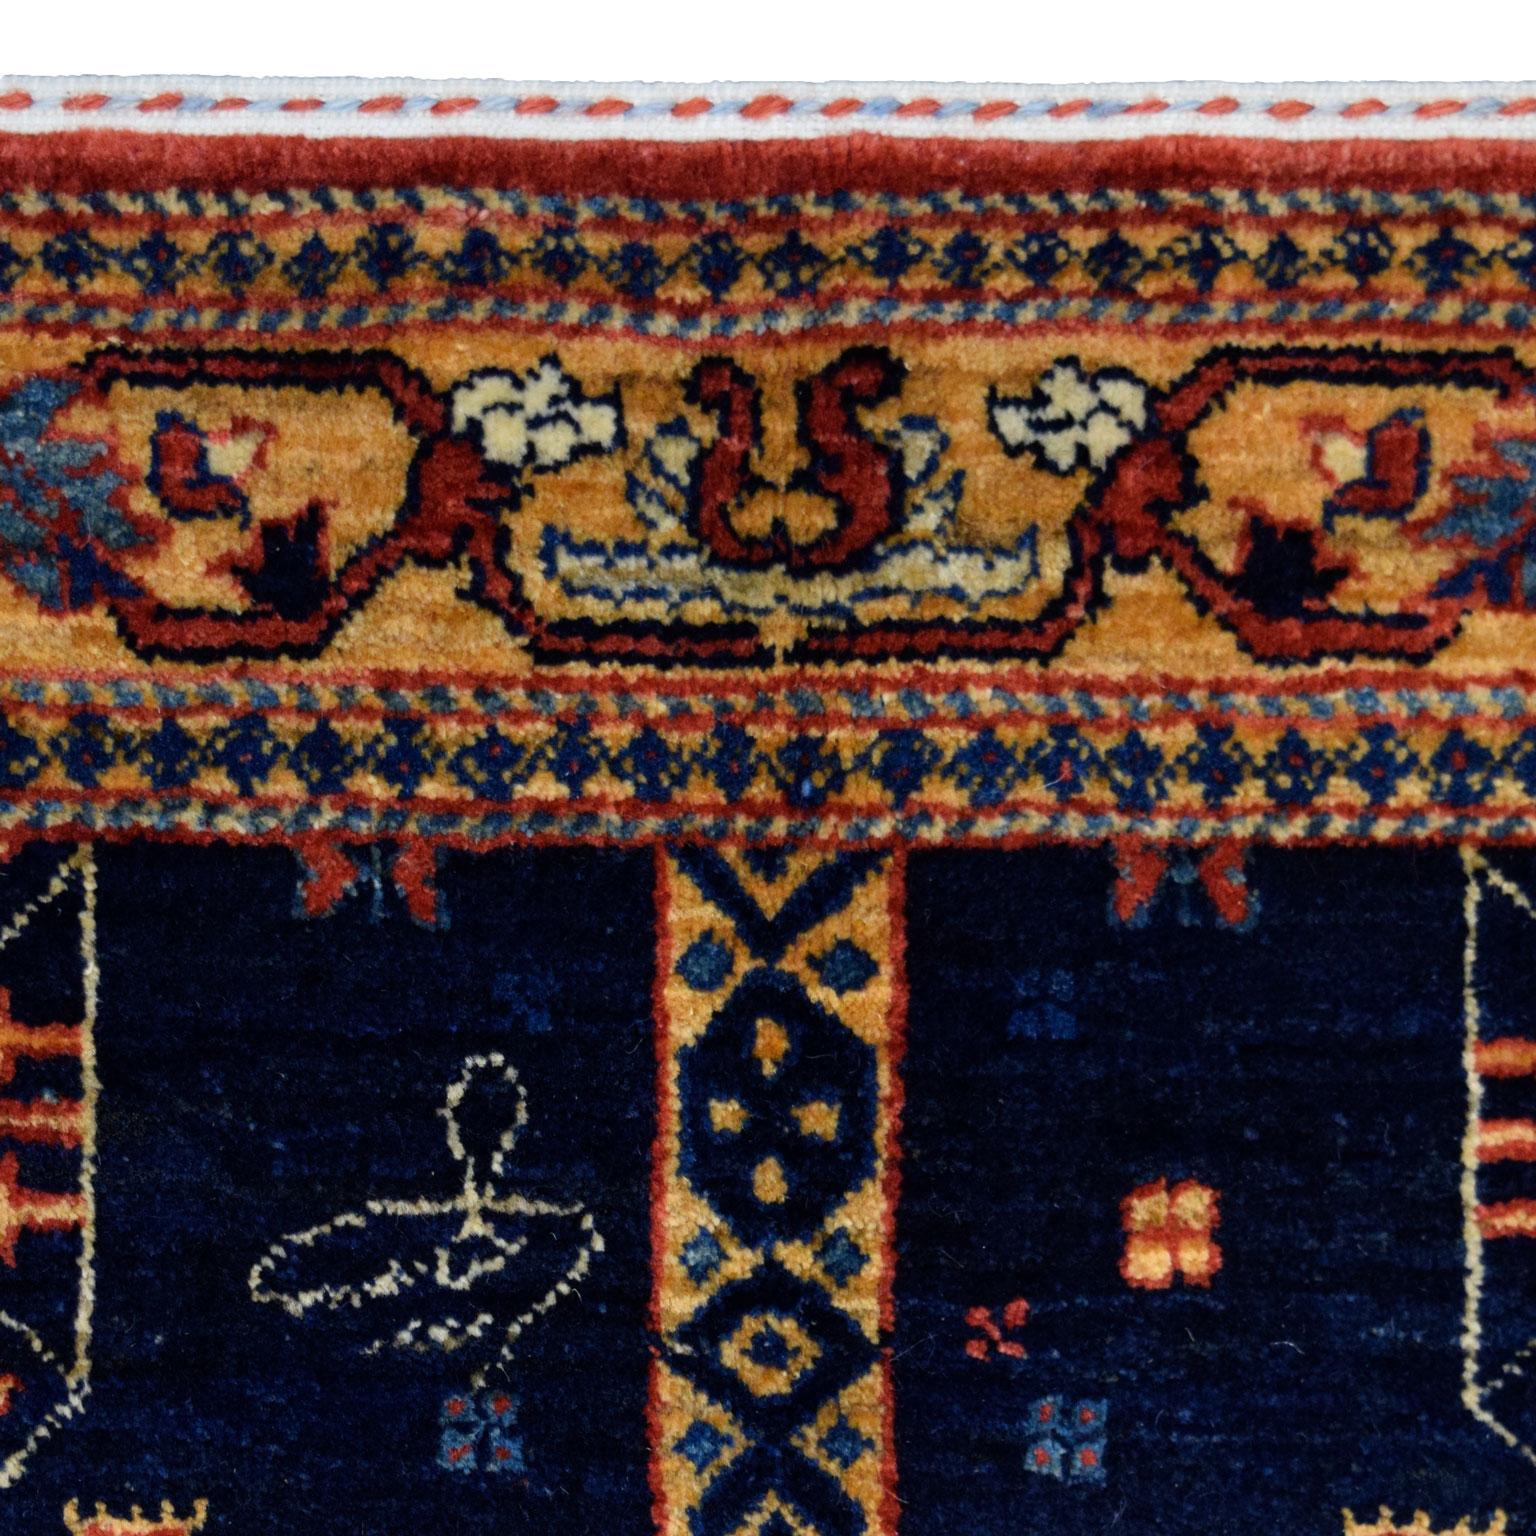 Ce tapis Orley Shabahang Qashqai de la Collection Tribal mesure 4'2